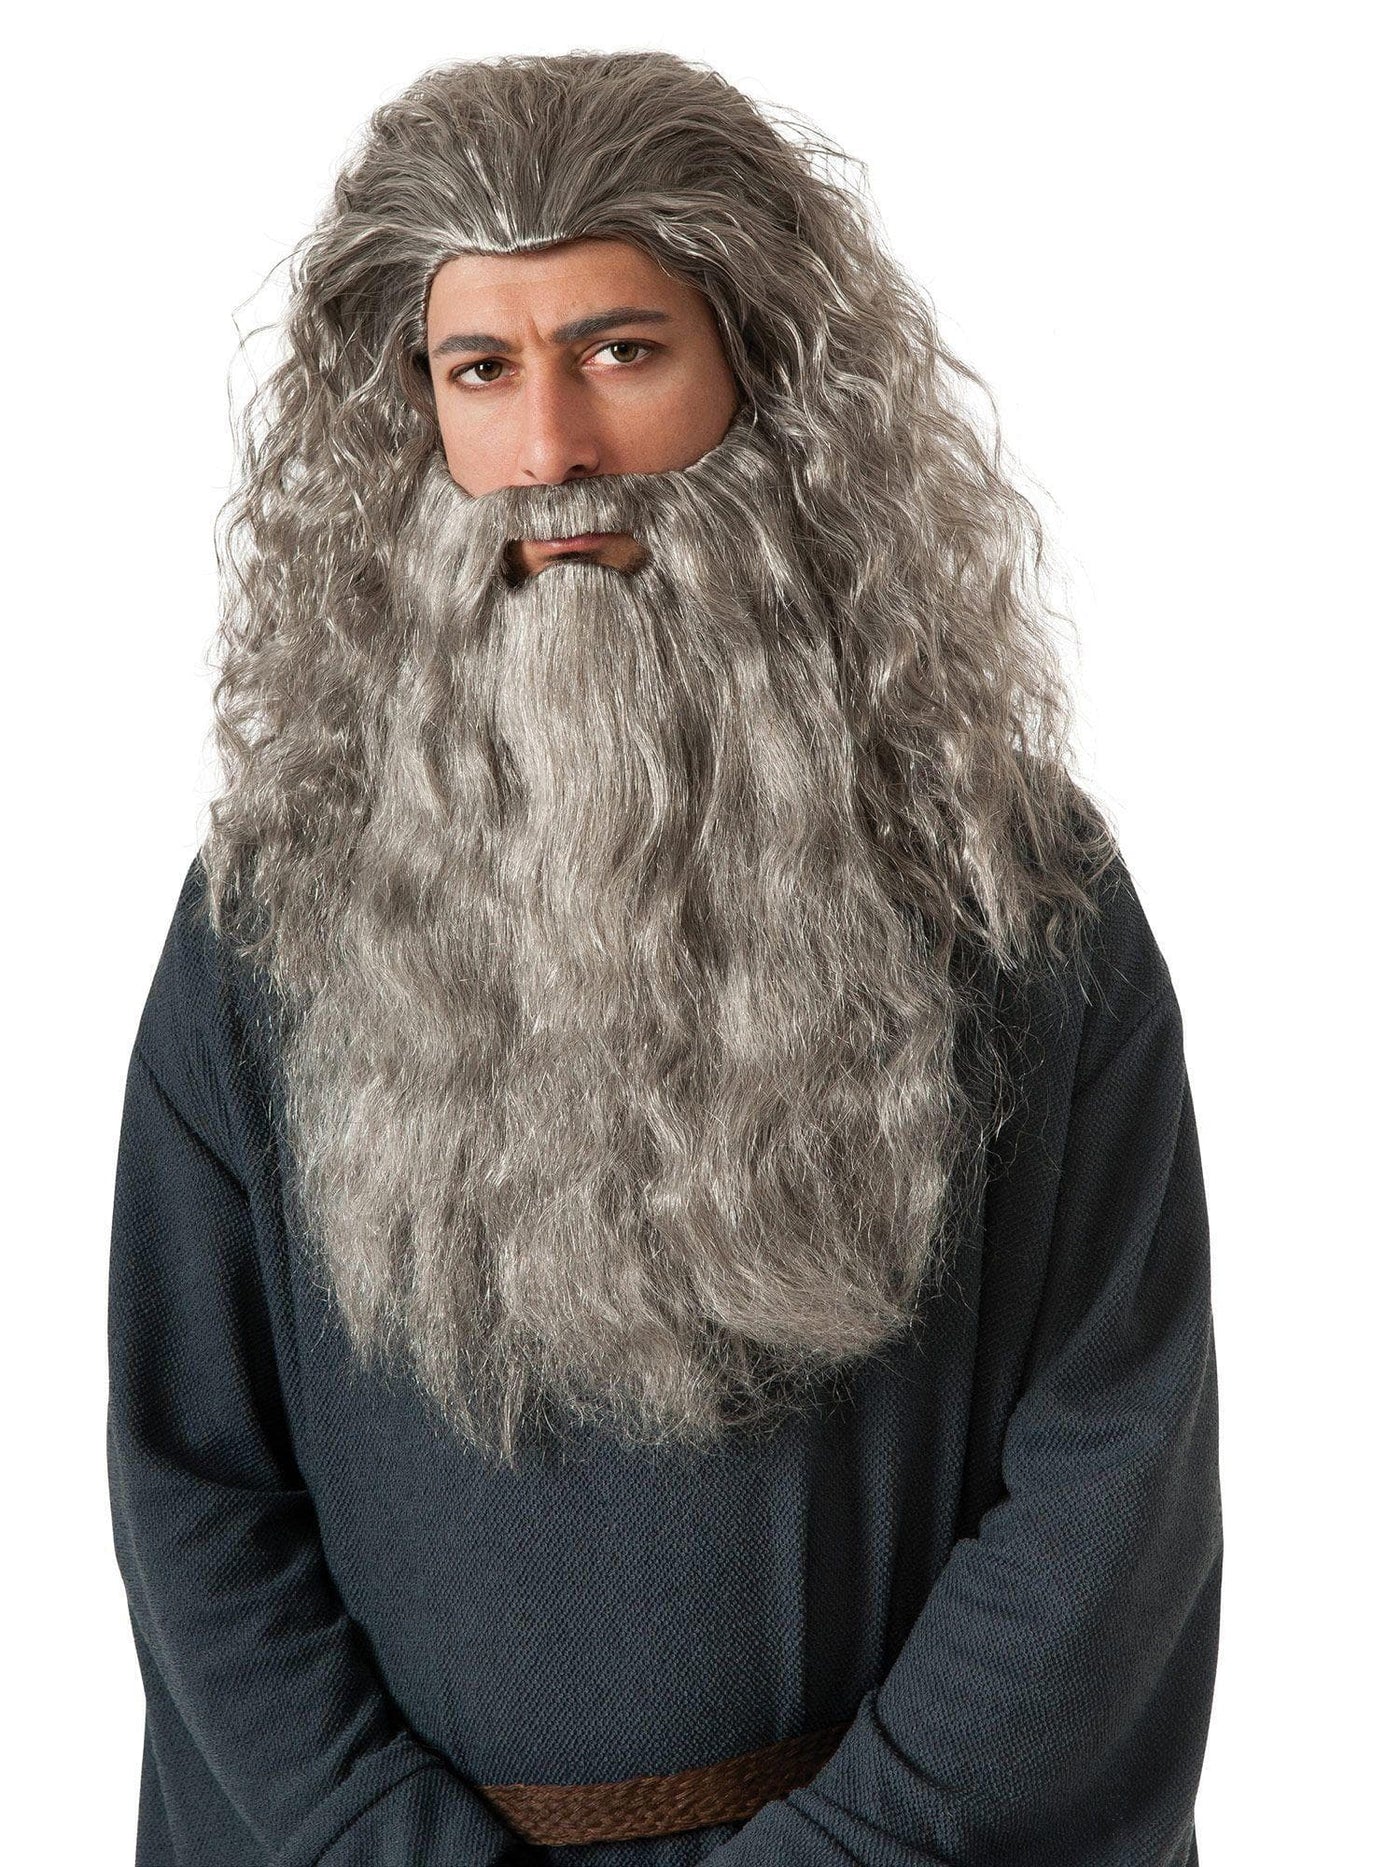 The Lord of the Rings Men's Gandalf Beard Kit